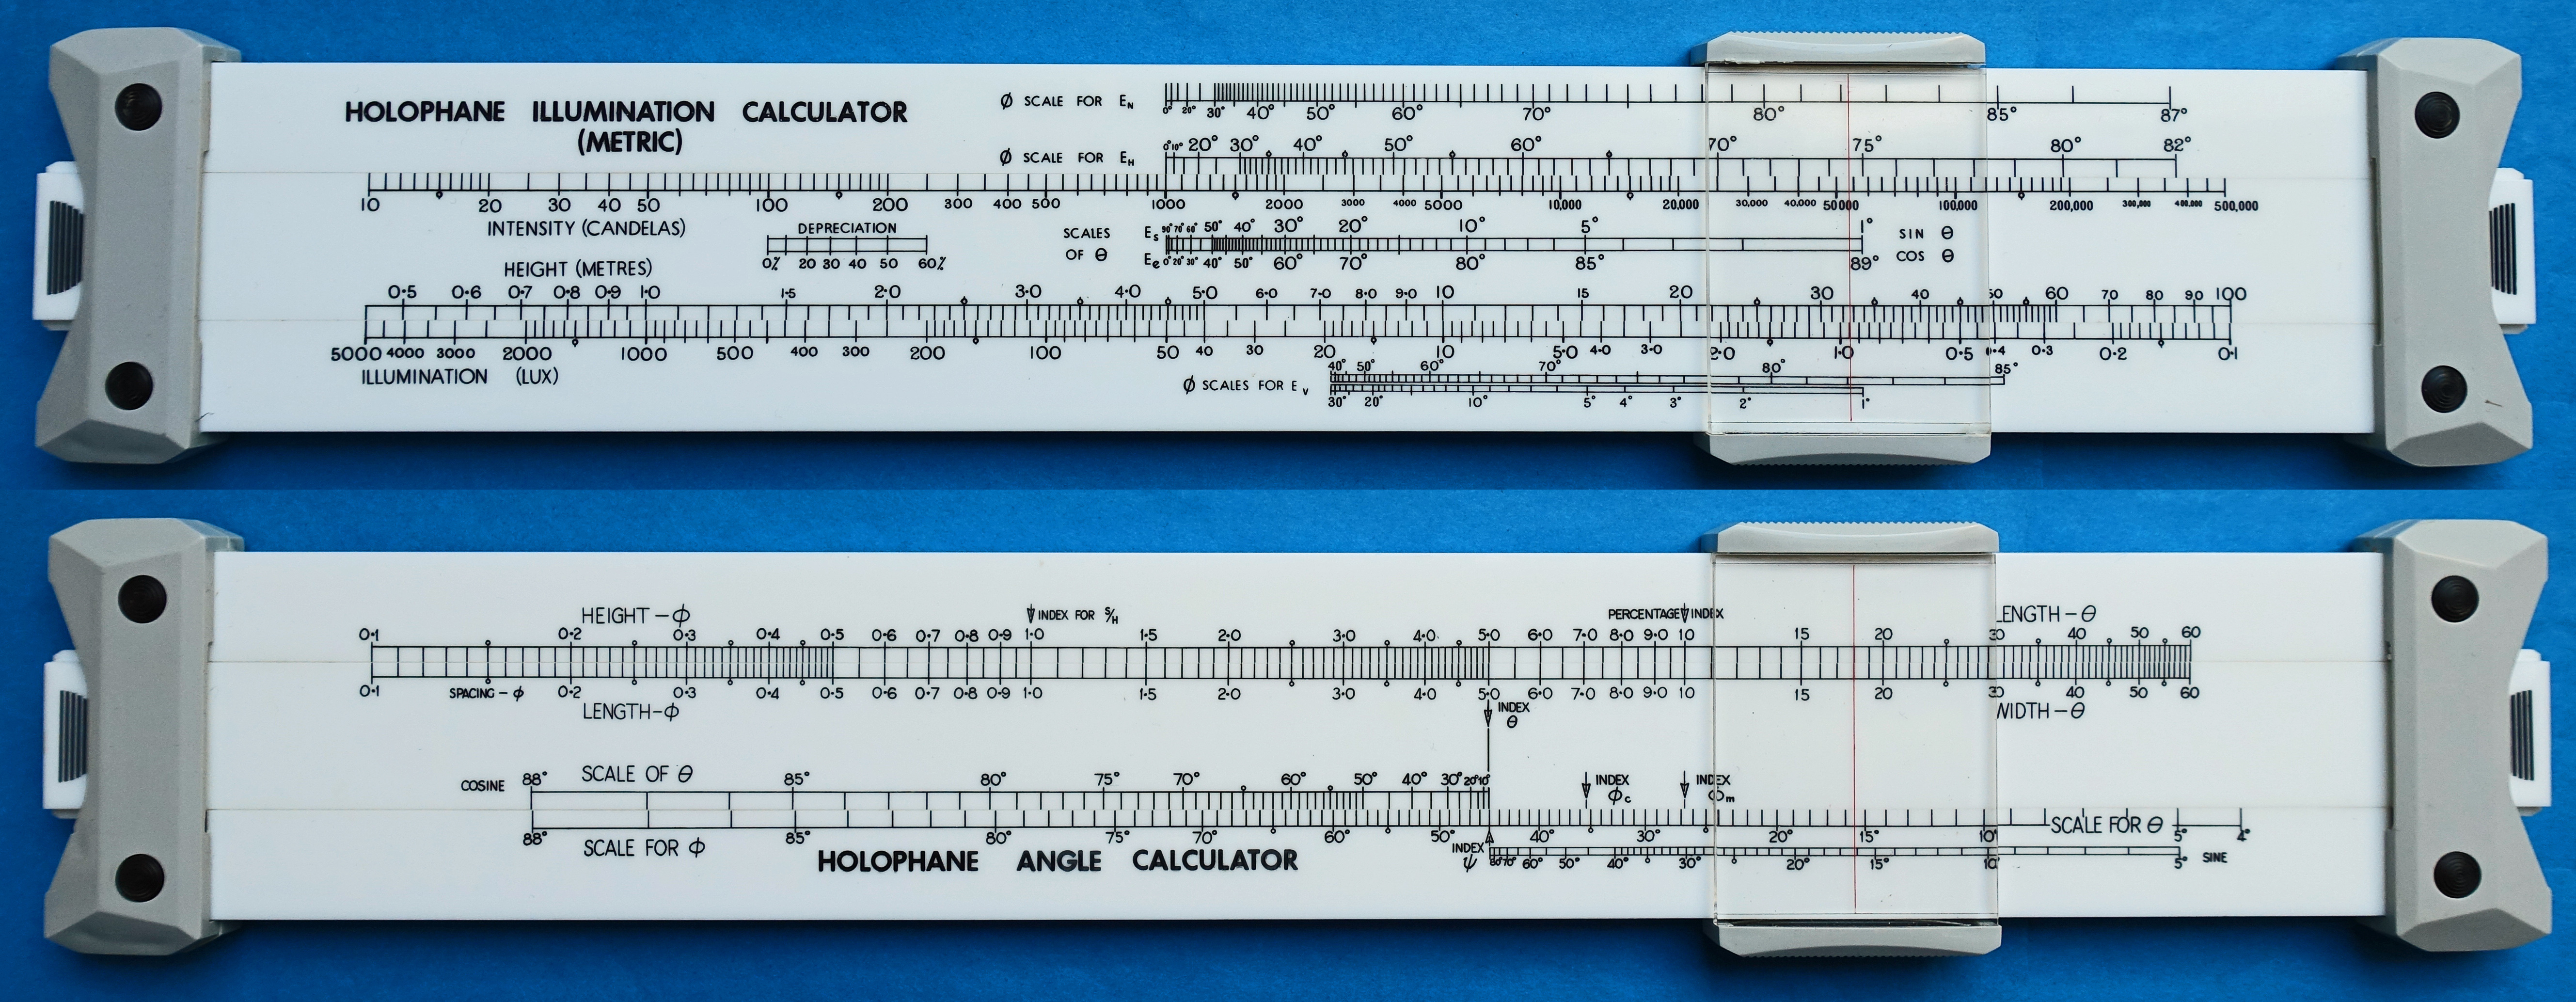 Blundell Harling Ltd. (BH) P4099 Holophane Illumination & Angle Calculator (metric)